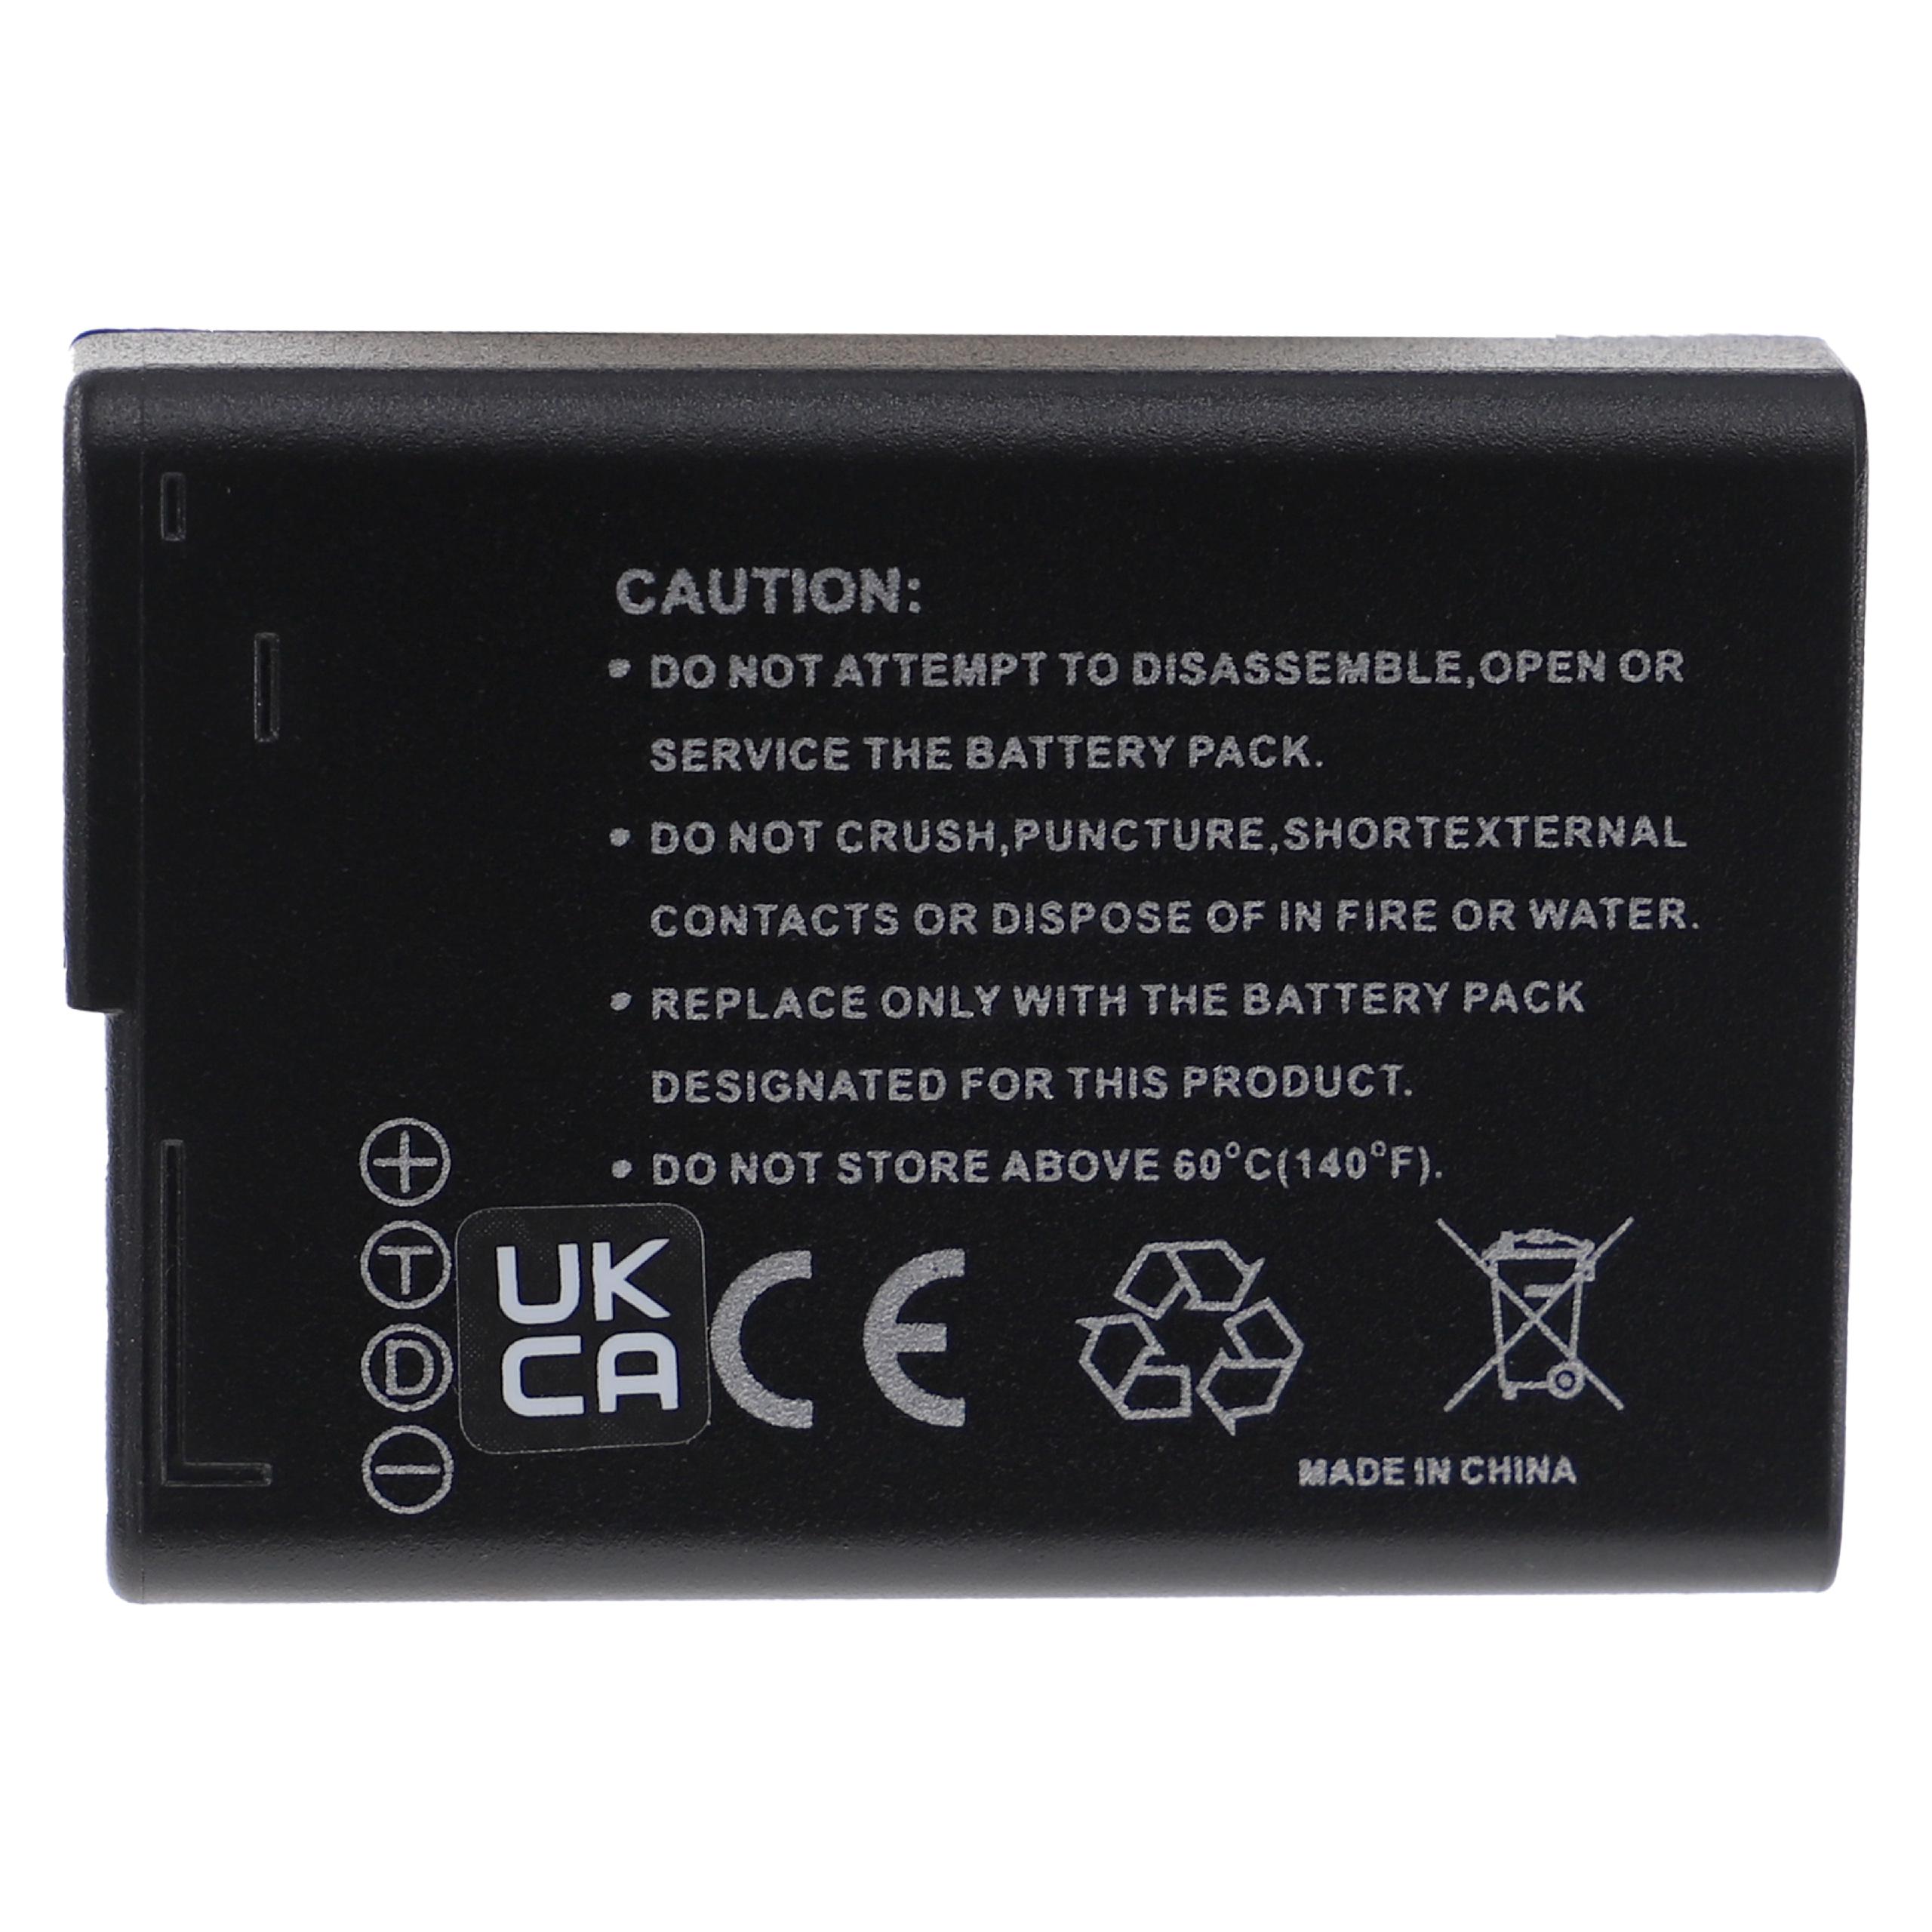 Batterie remplace Panasonic DMW-BLD10E, DMW-BLD10, DMW-BLD10PP pour appareil photo - 950mAh 7,4V Li-ion